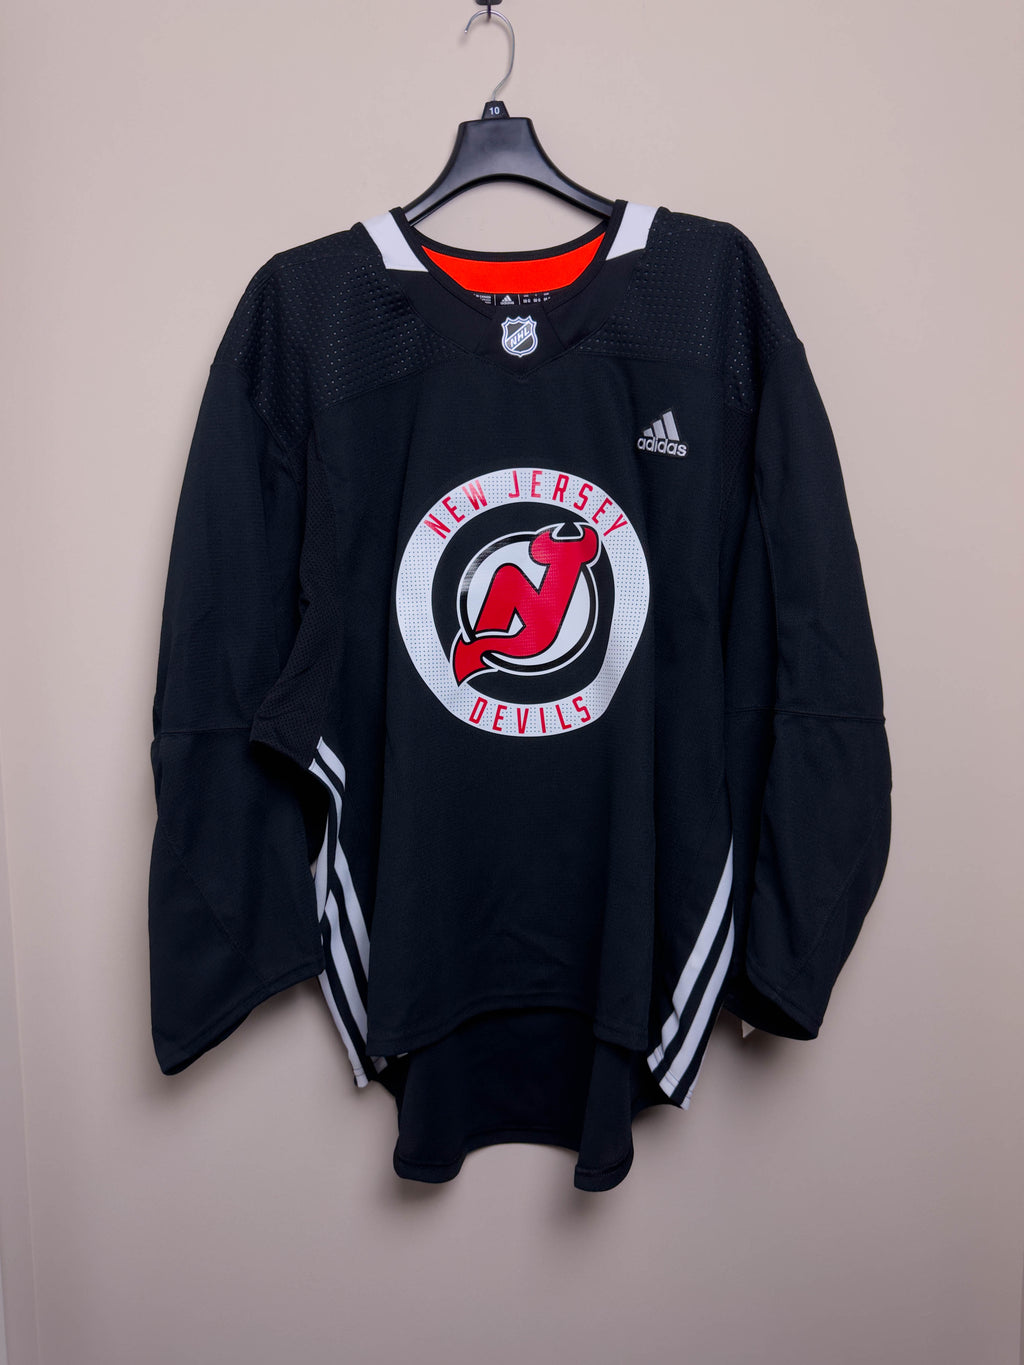 New Jersey Devils St. Patty's Day Warm-Up MiC Size 56 Adidas Jersey